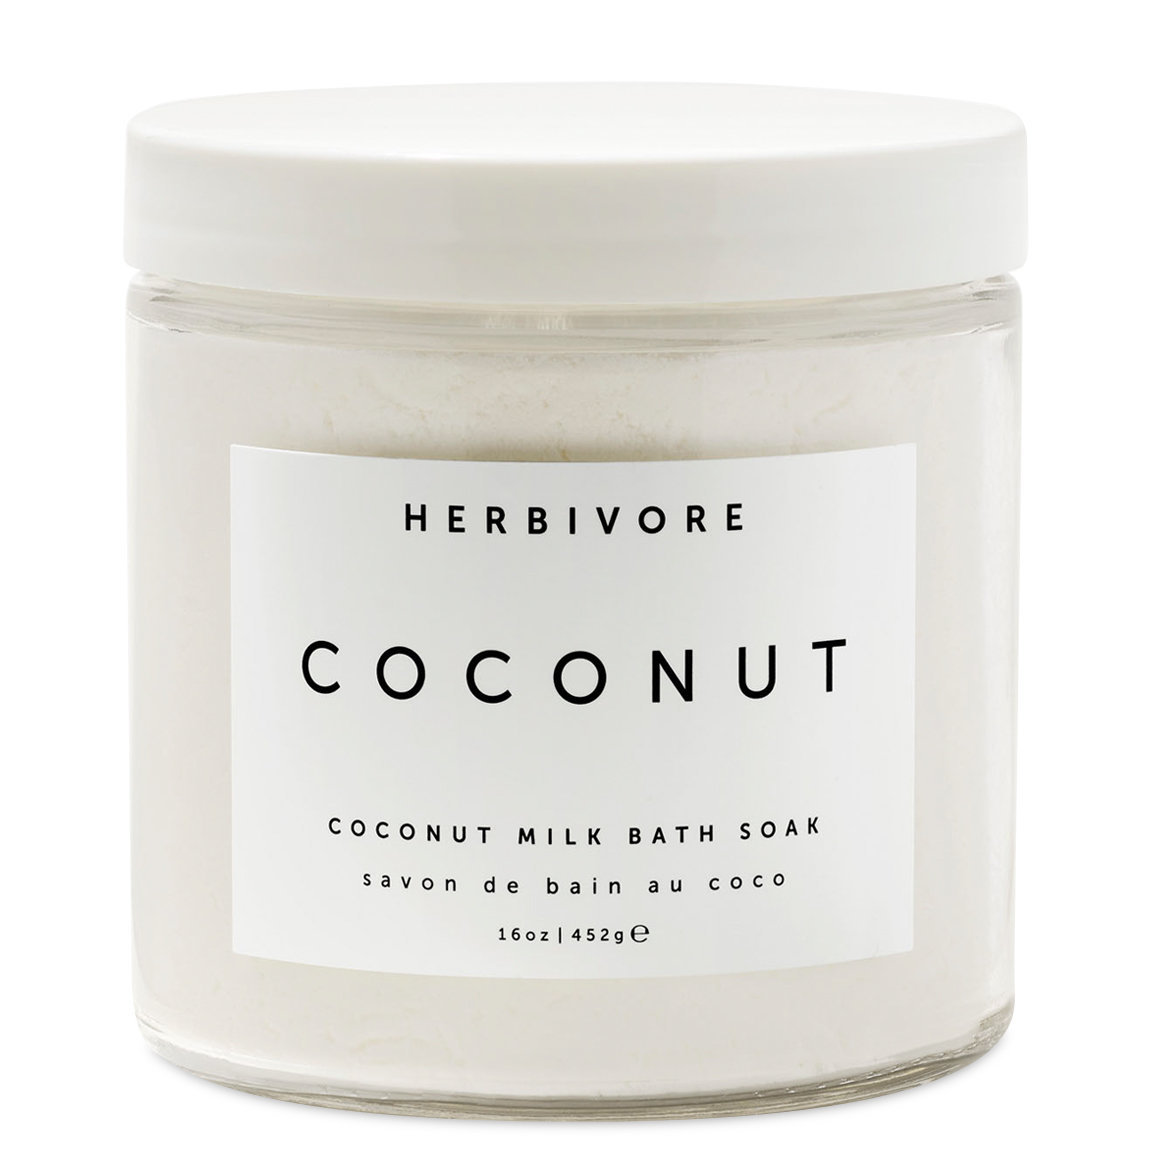 Herbivore Coconut Milk Bath Soak  alternative view 1 - product swatch.